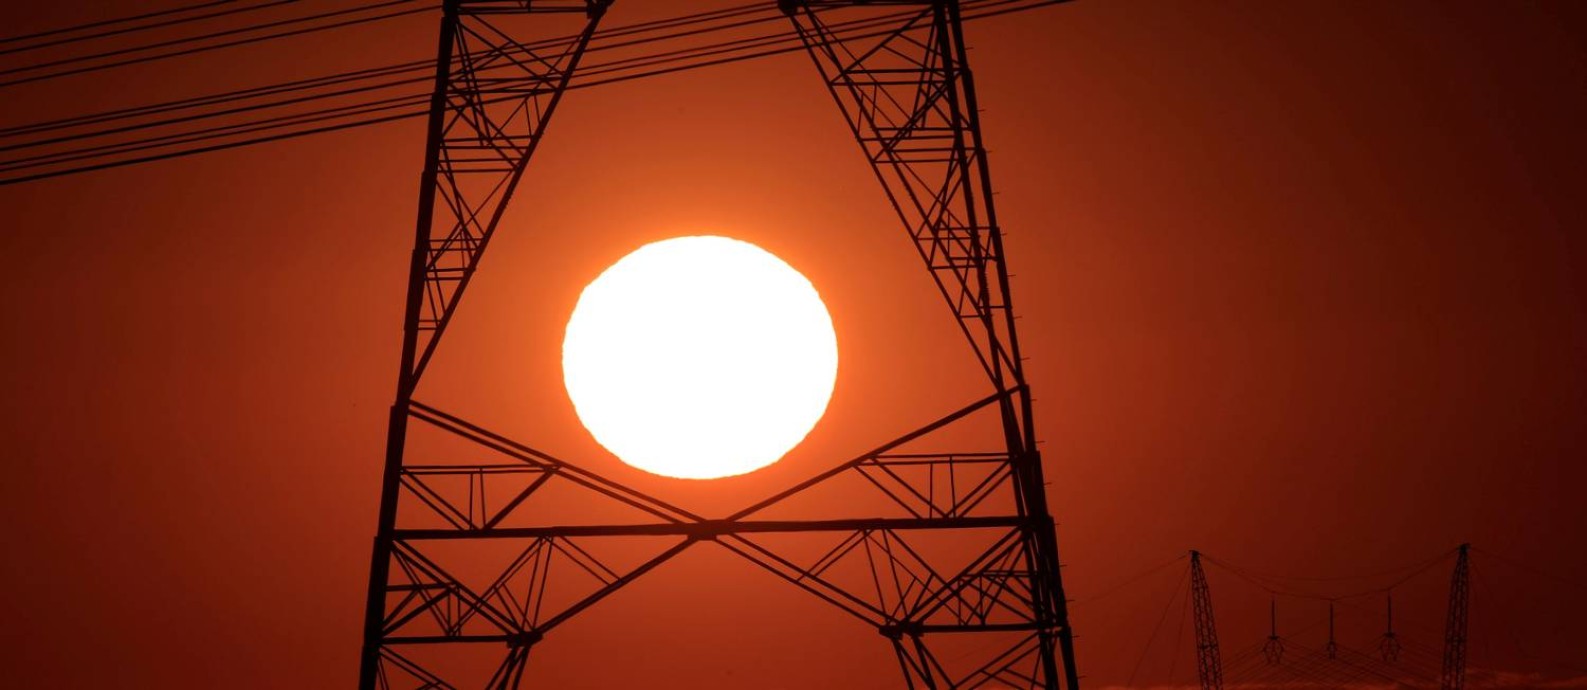 Torre de transmissão de energia em Brasília Foto: Ueslei Marcelino / Reuters